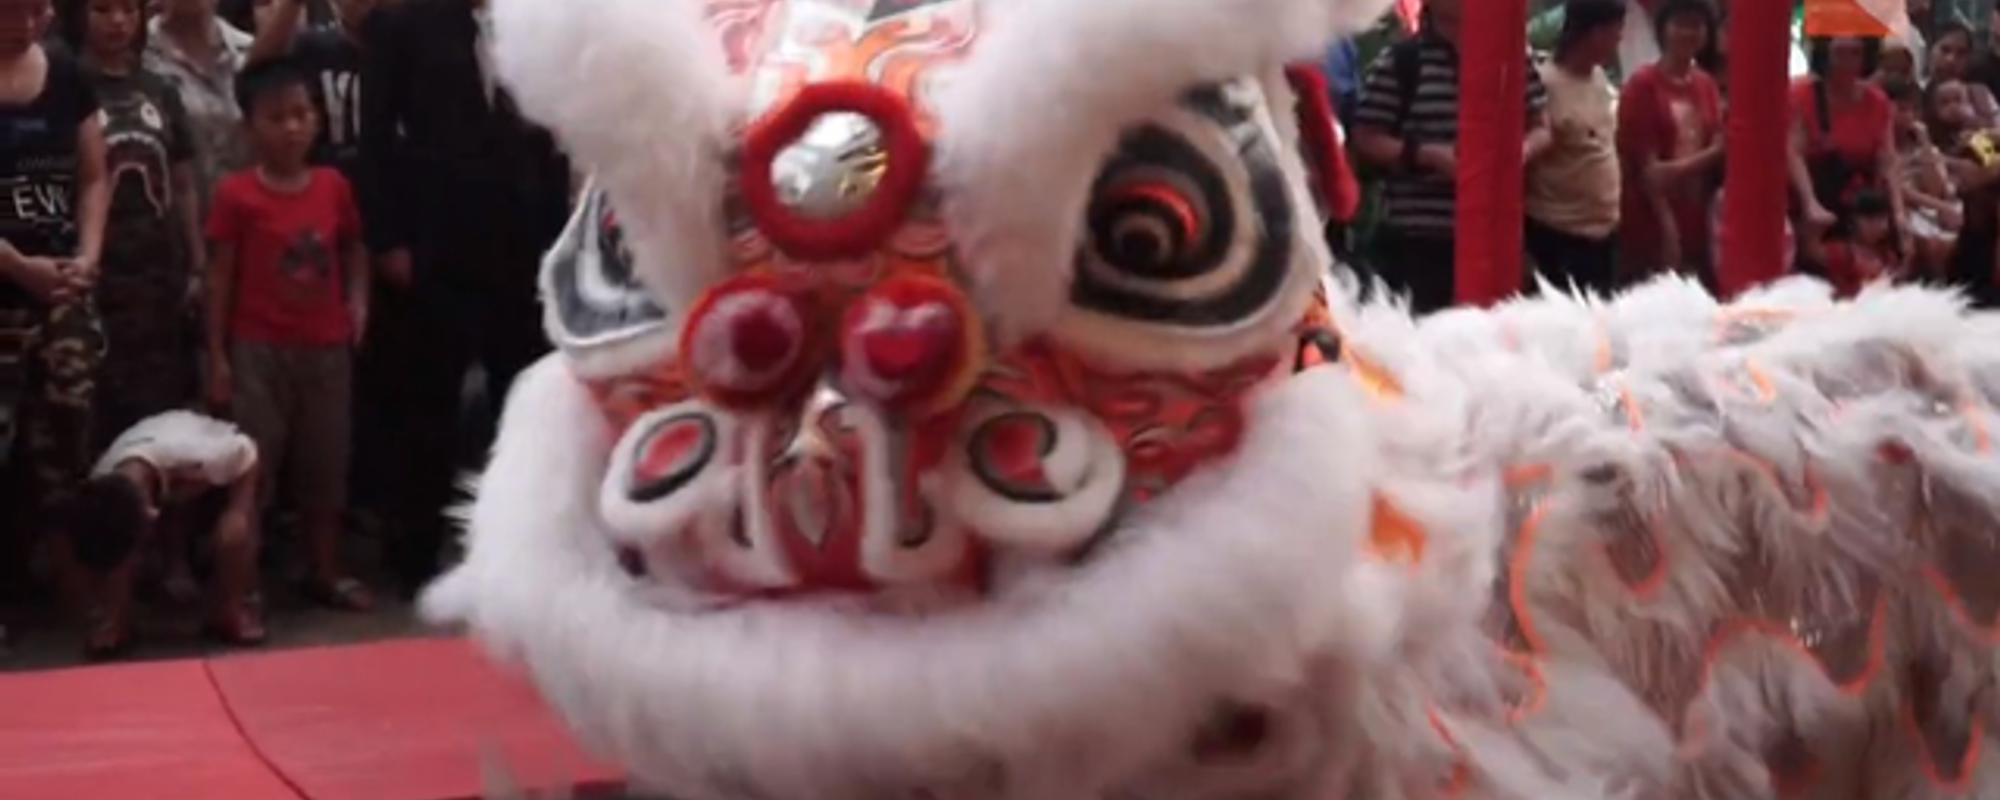 Cap Go Meh Festival: The joyful, vibrant and fun in Jakarta's Chinatown